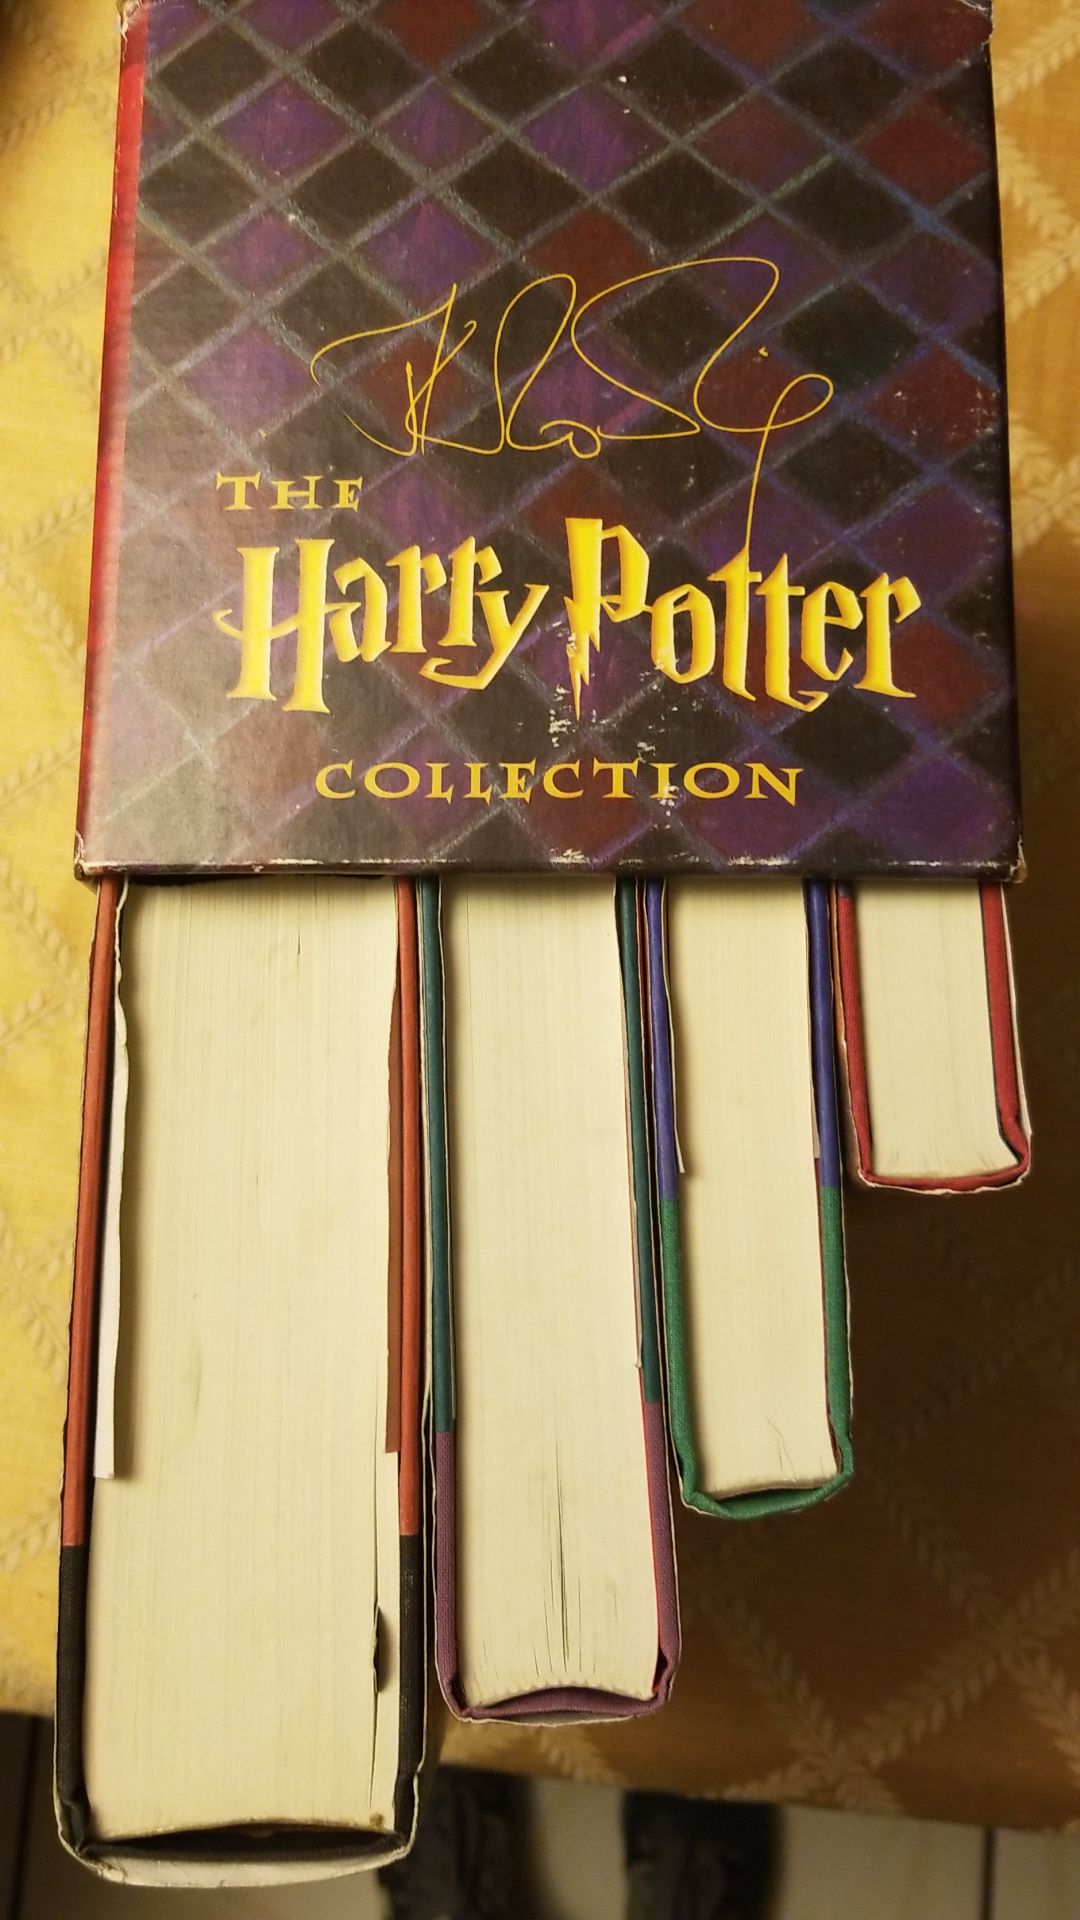 Harry Potter set of four books